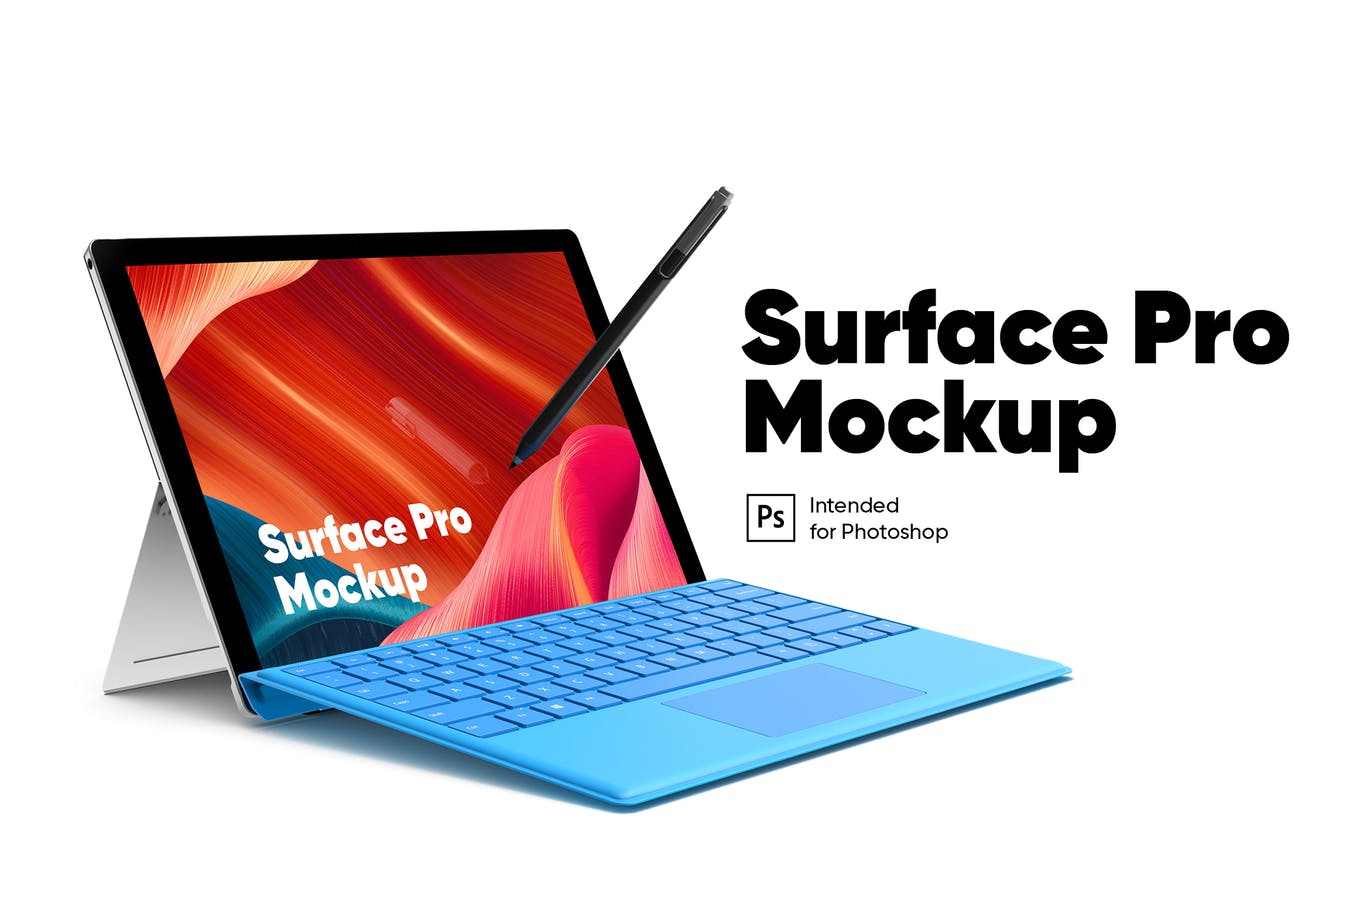 Surface Pro微软超极本Web设计屏幕预览第一素材精选样机 Surface Pro Mockup插图